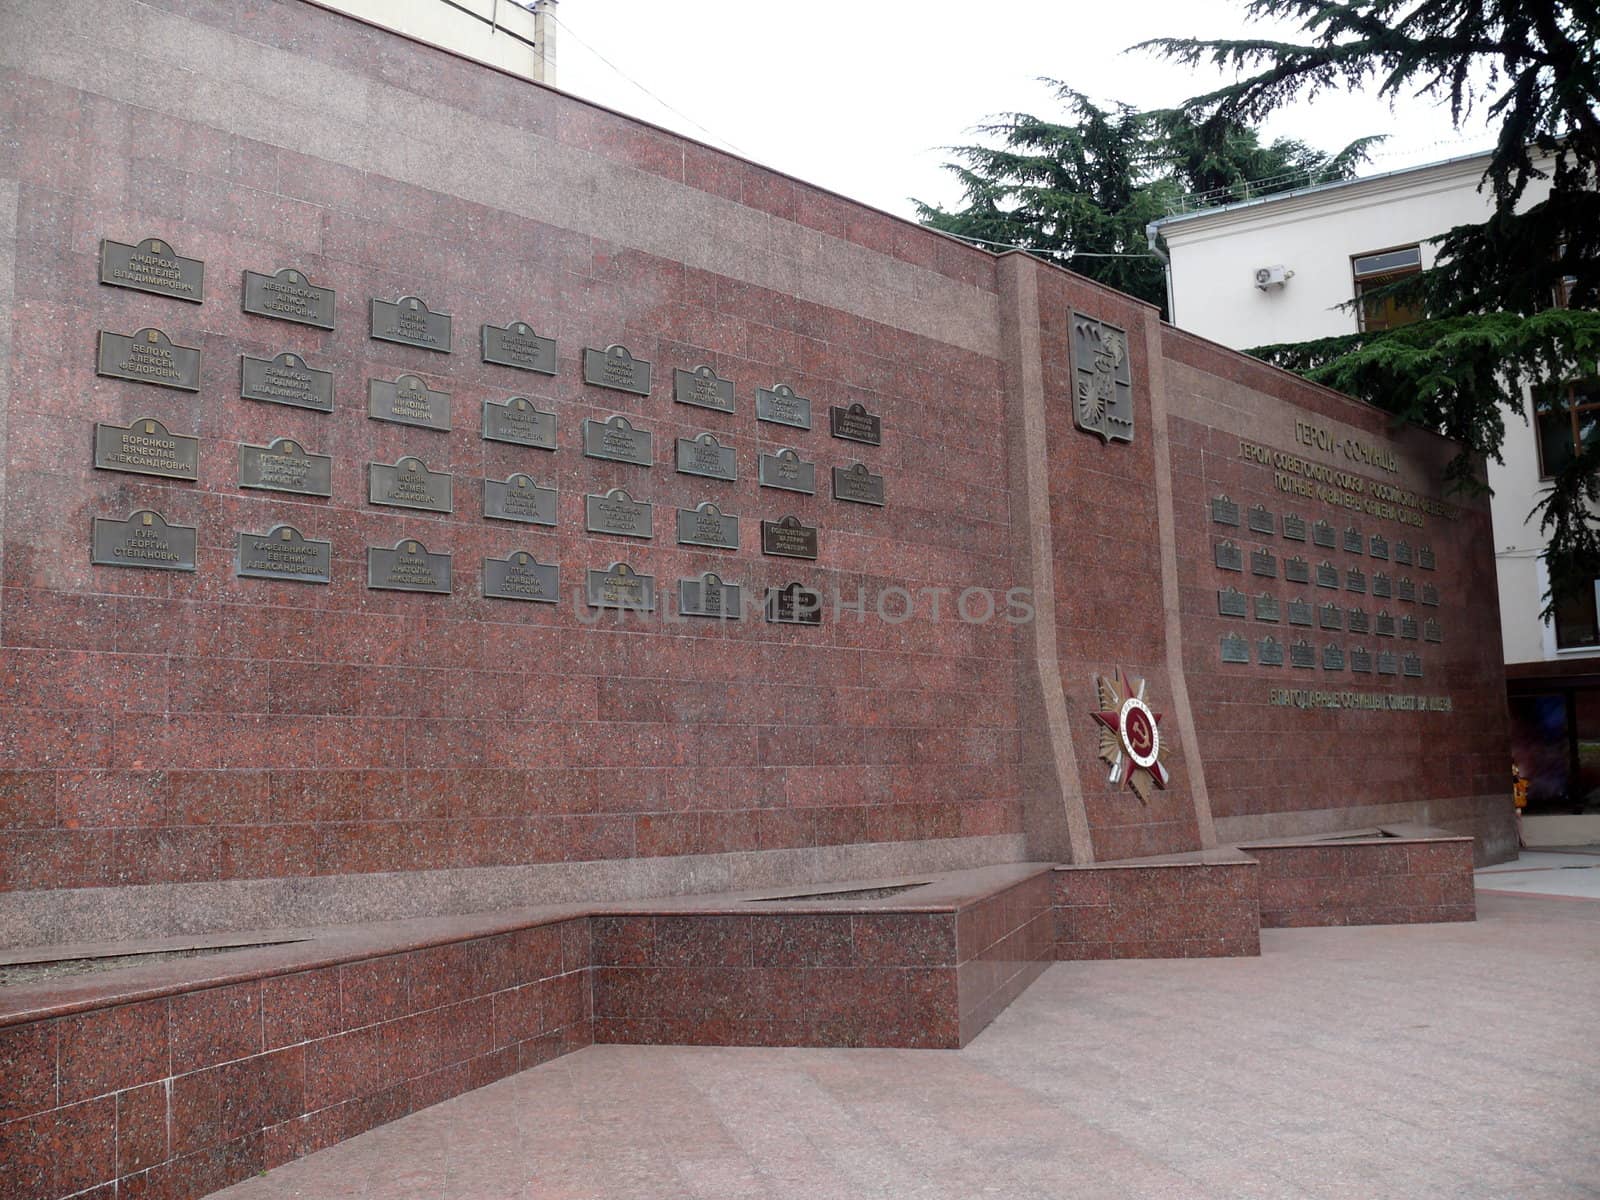 War memorial in the Sochi by Stoyanov